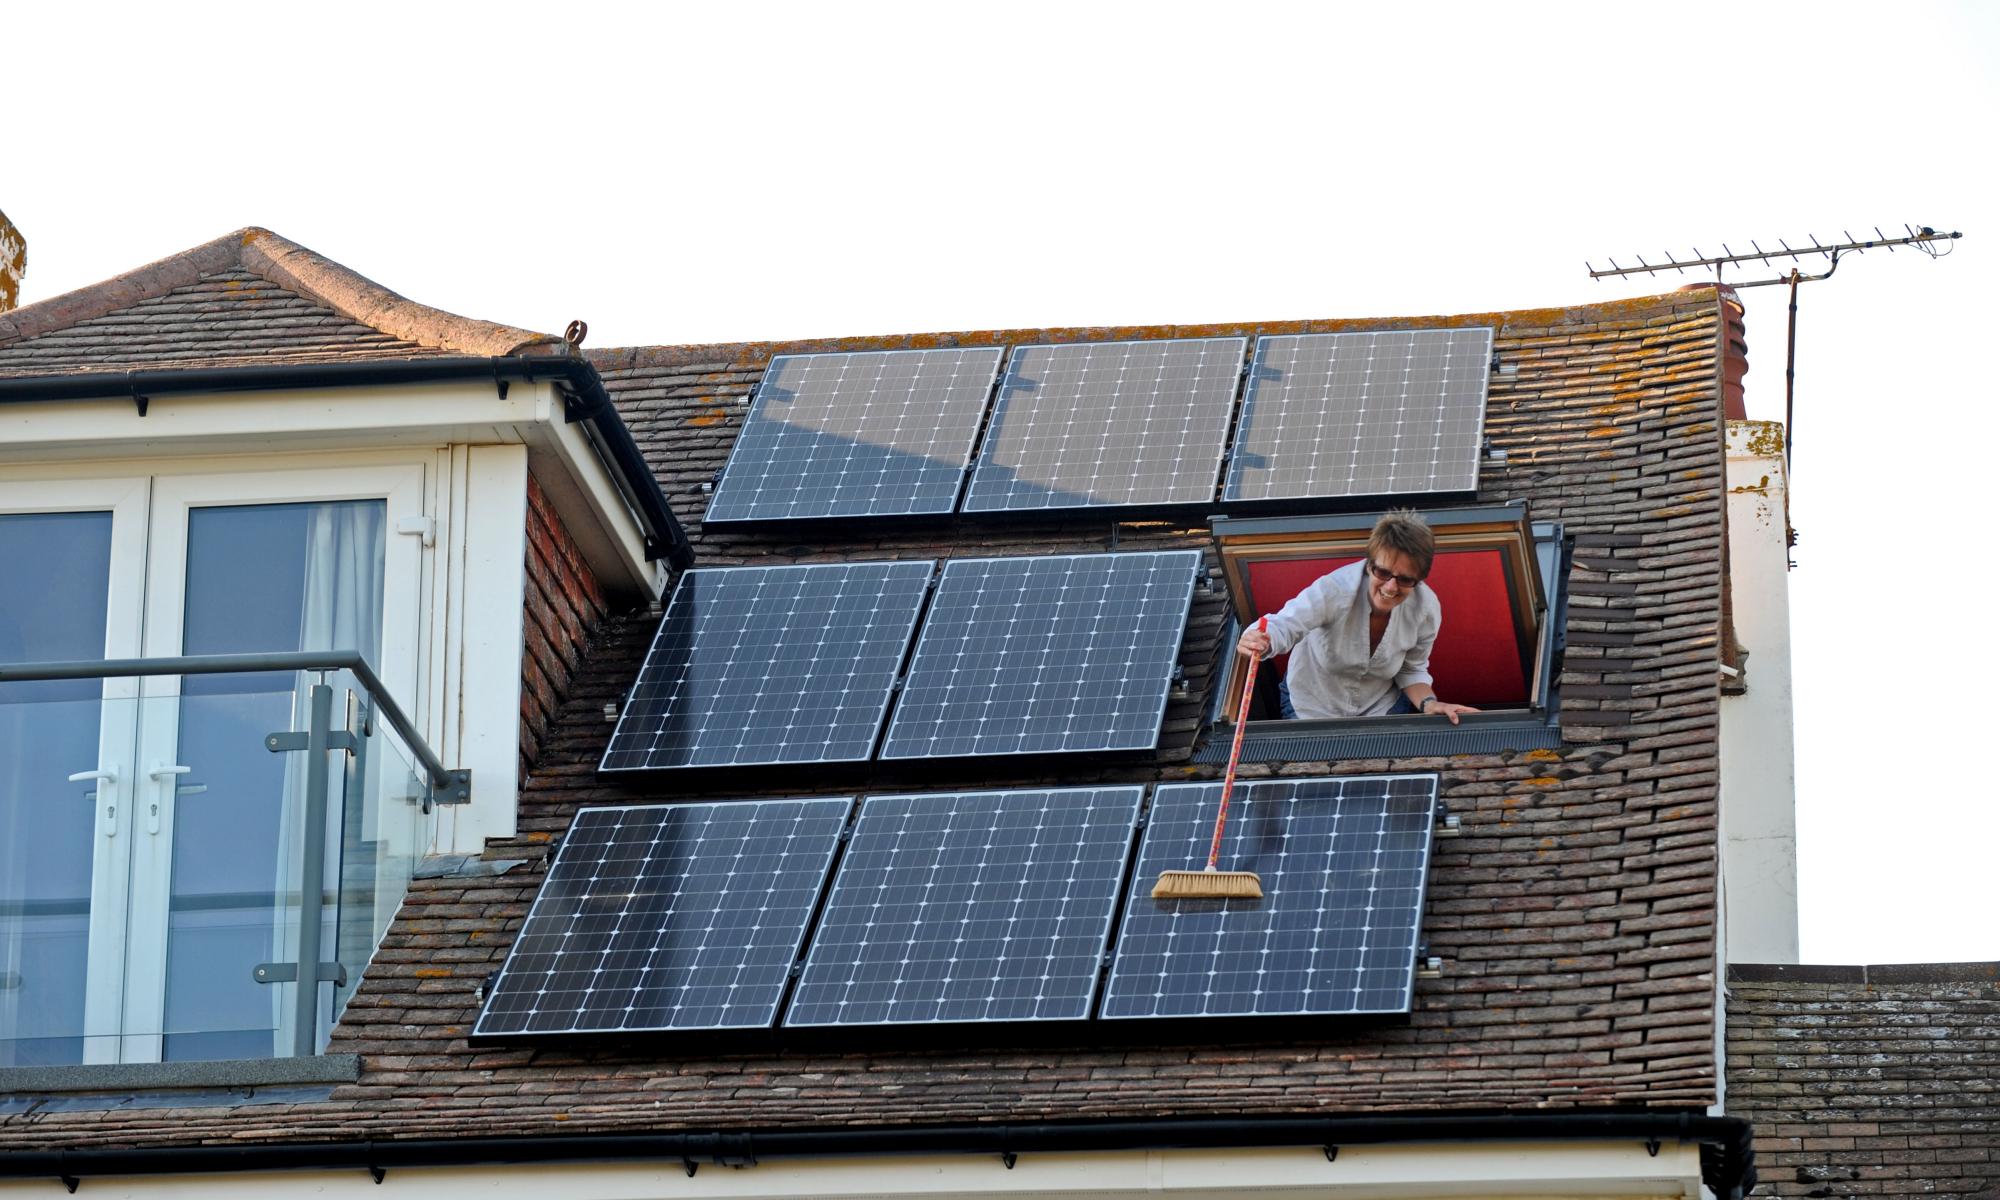 Weatherwatch: Covid-19 lockdown boosts UK solar power